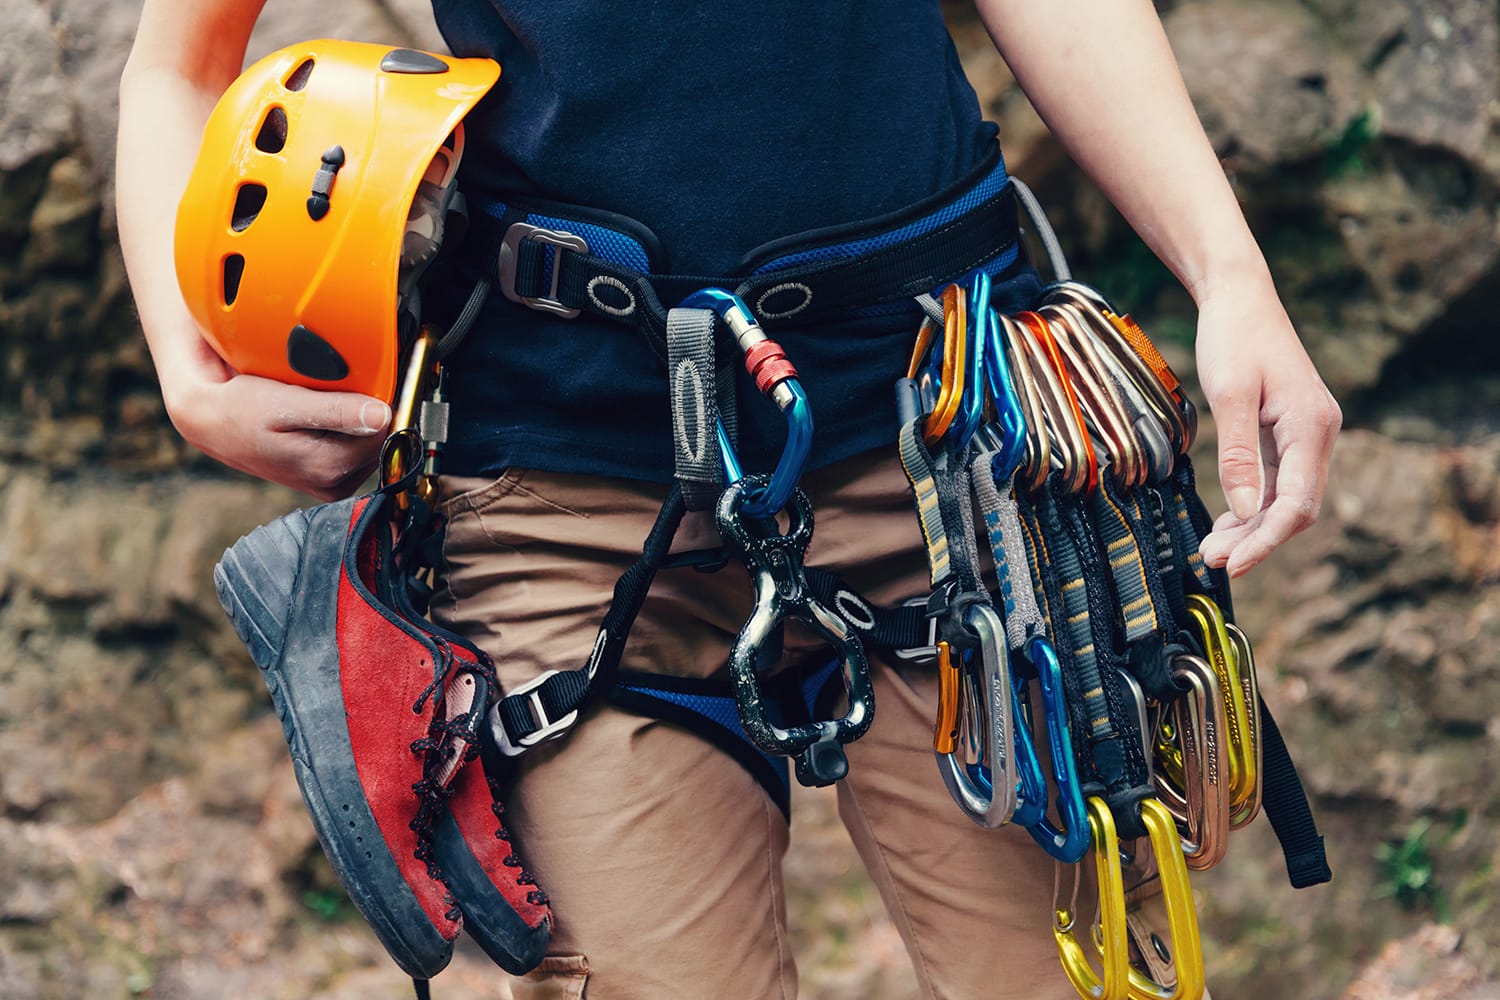 Thick Climbing Harness 661lbs Safety Belt Rock Climbing Survival Equipment